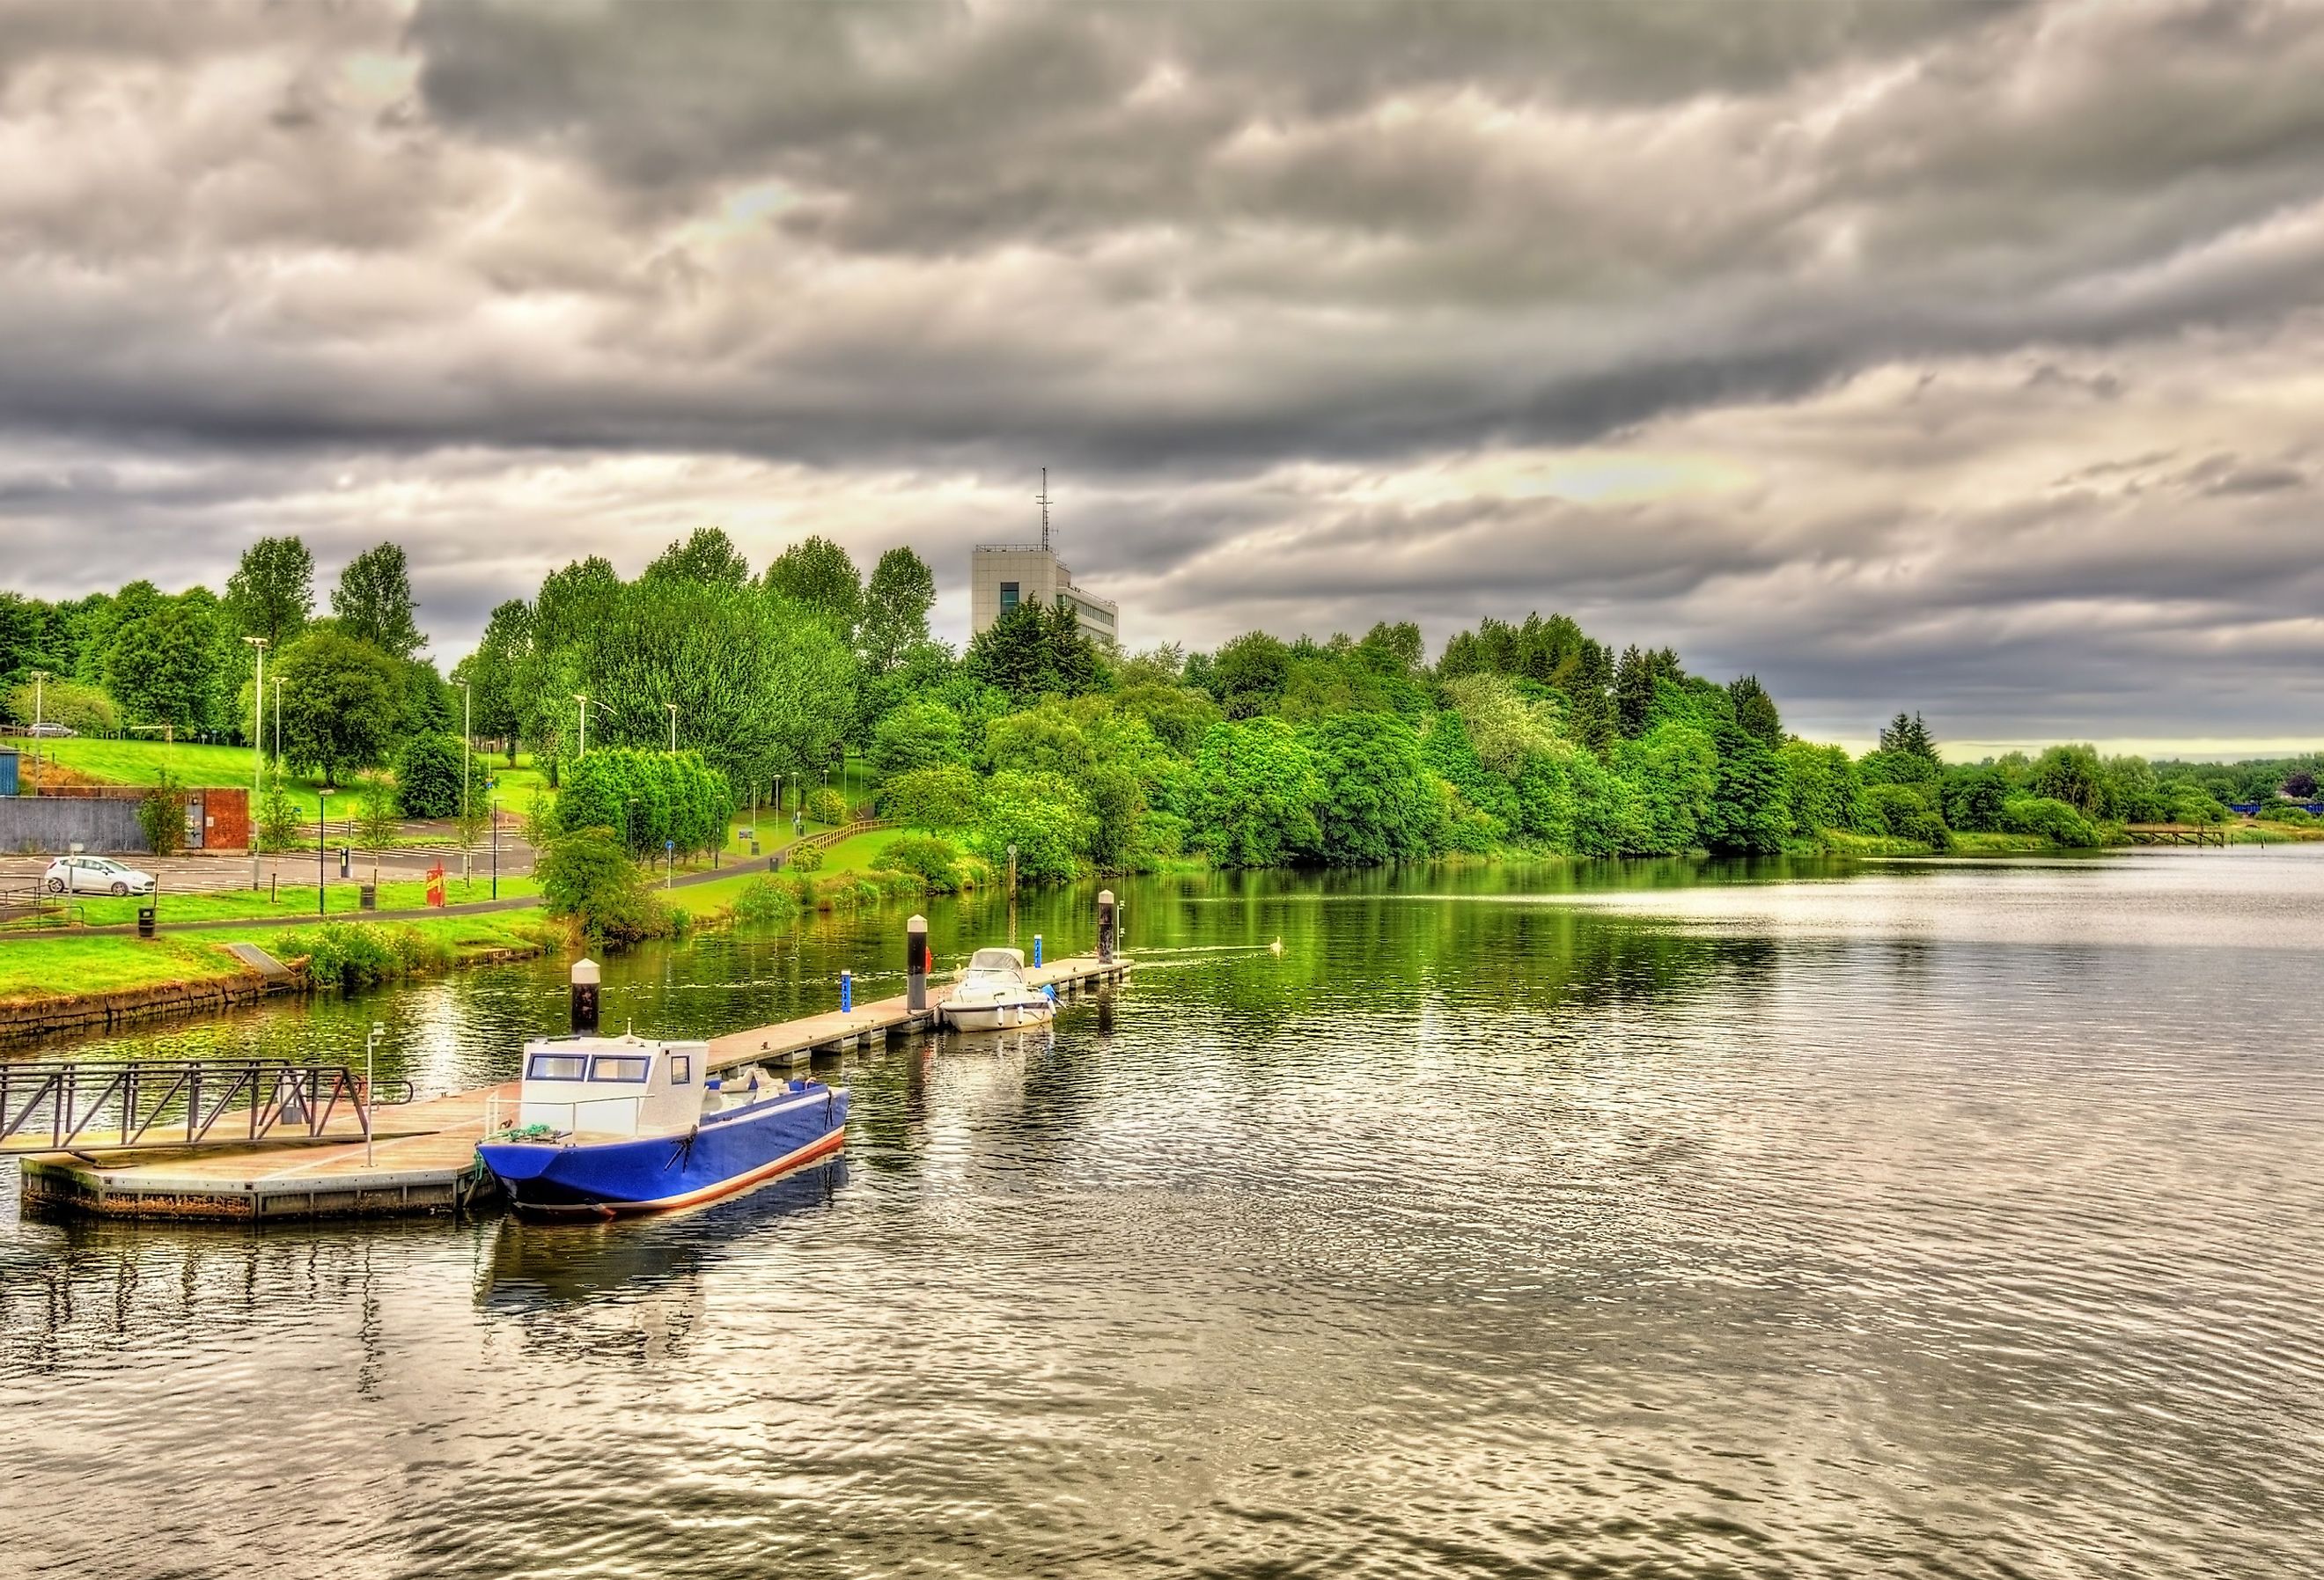 River Bann from Coleraine. Image credit Leonid Andronov via Shutterstock.